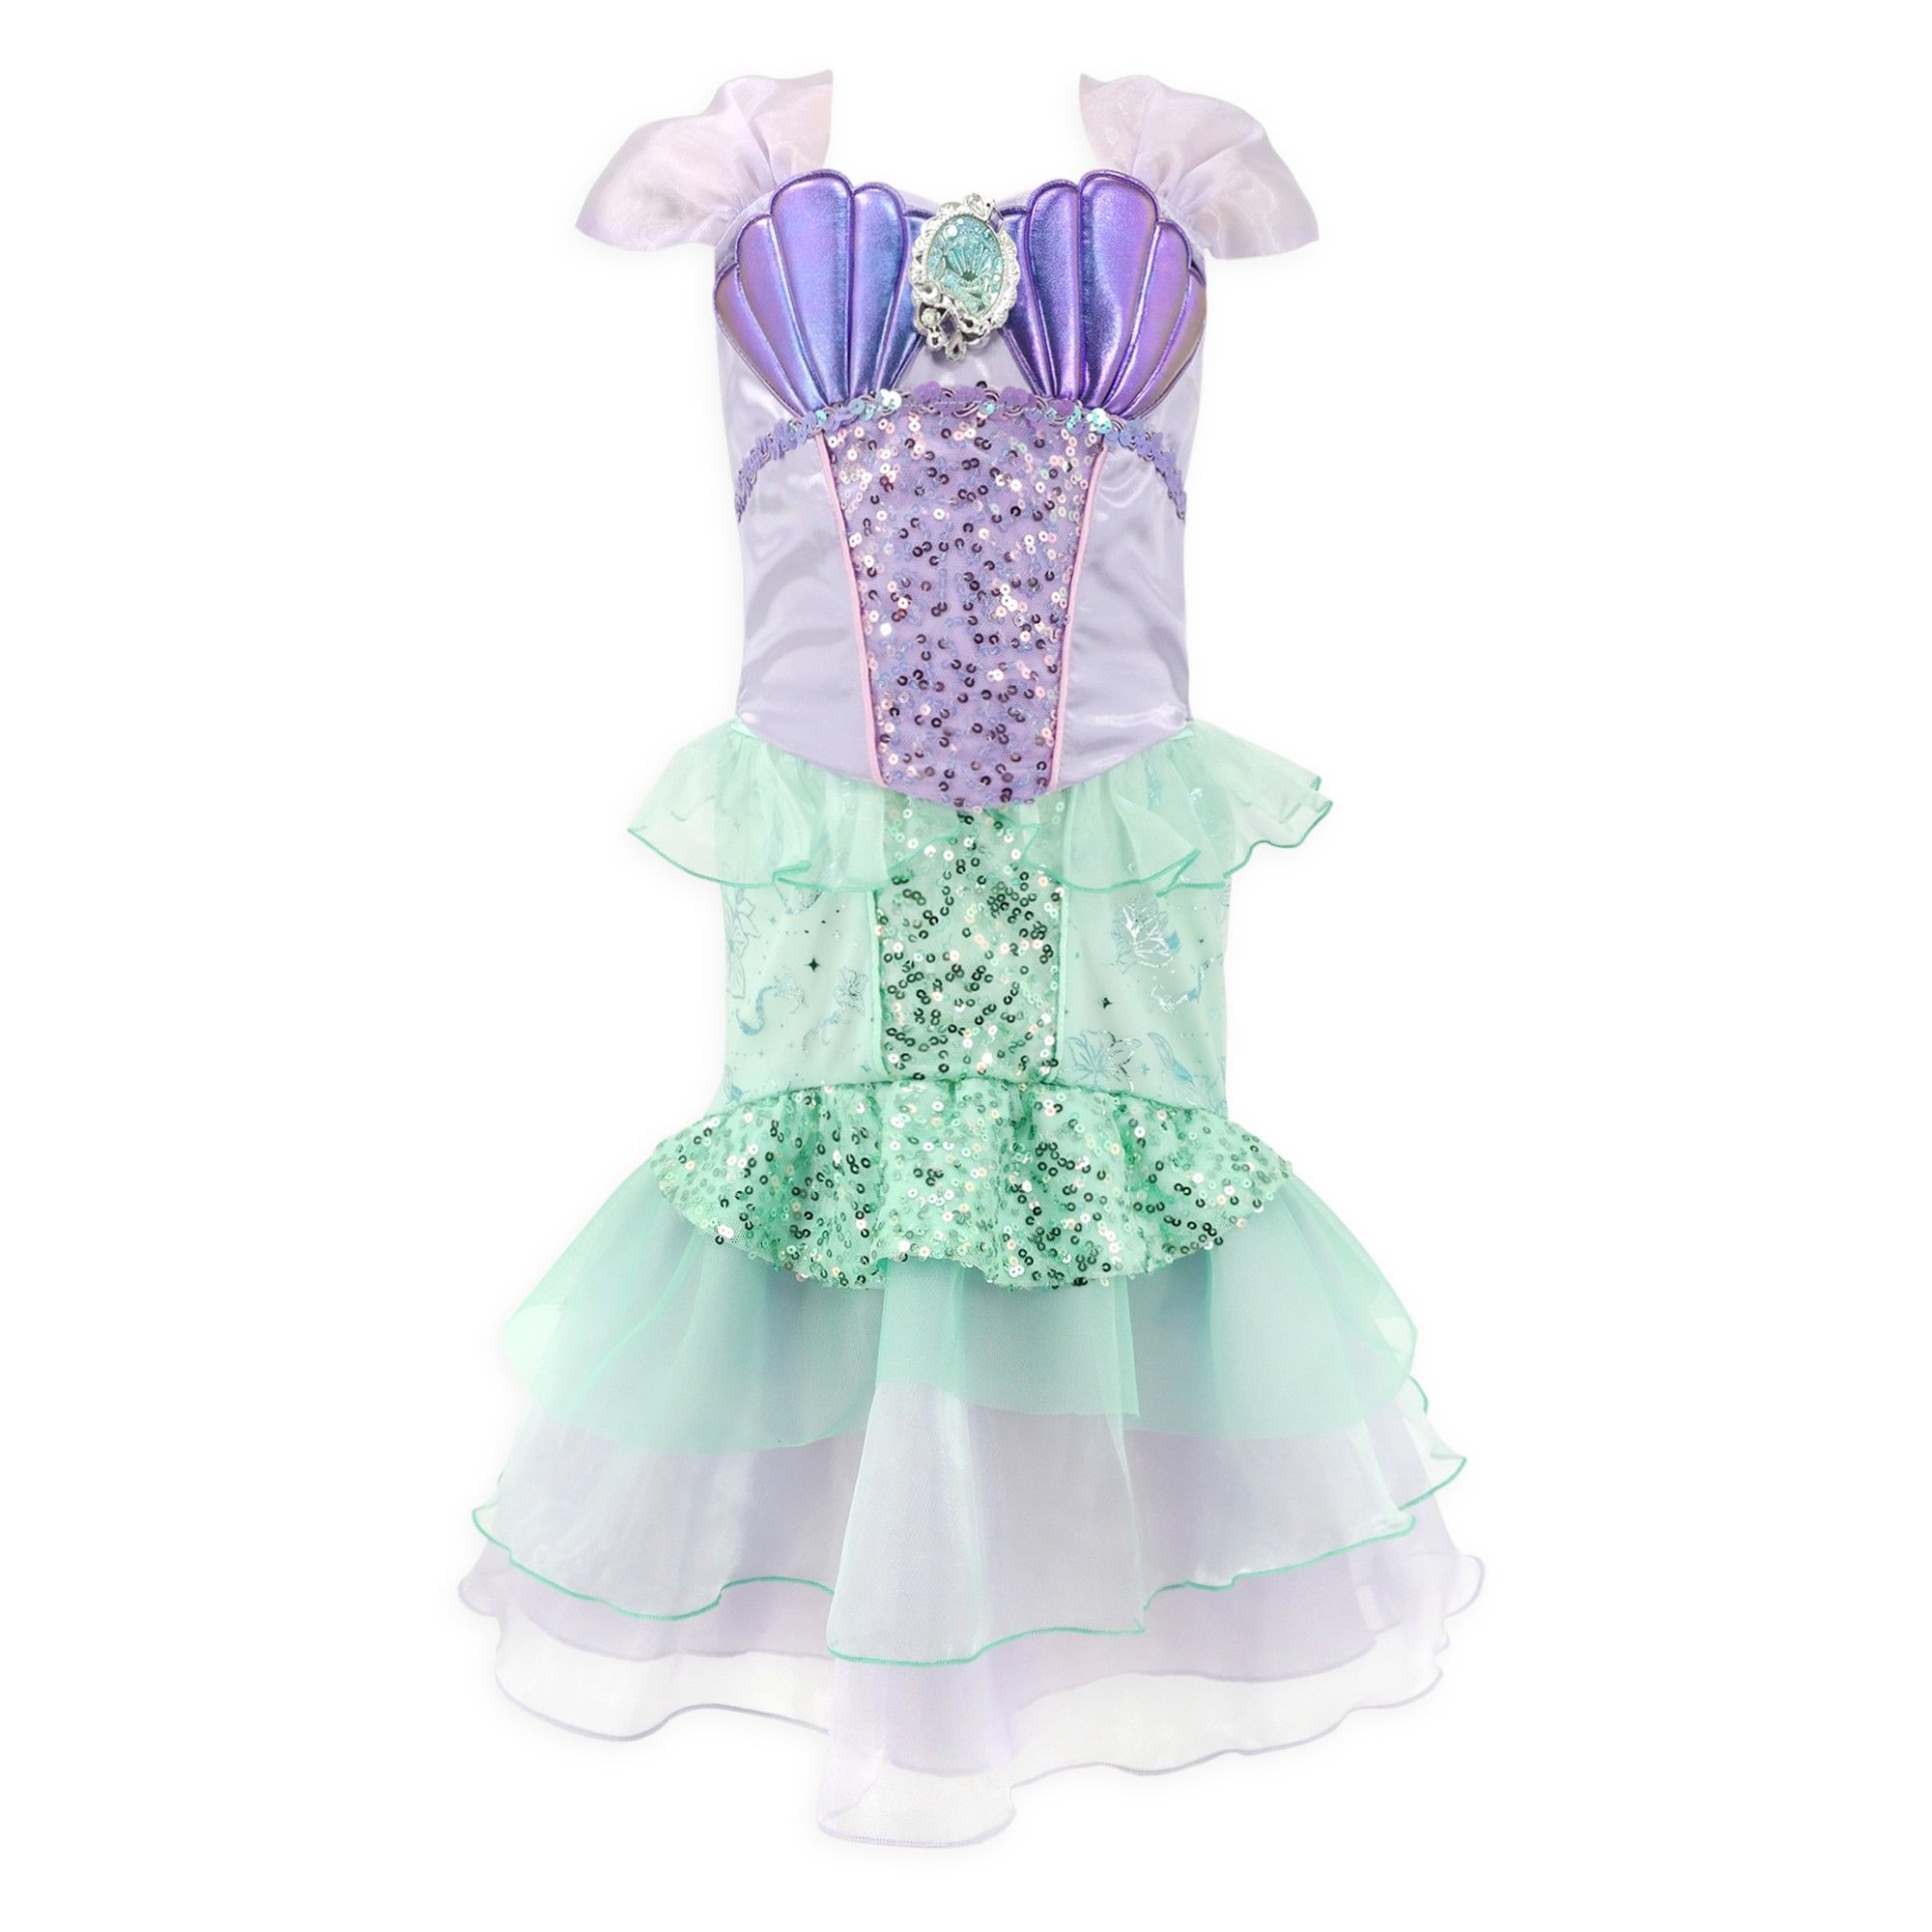 Ariel Costume for Kids – The Little Mermaid | Disney Store